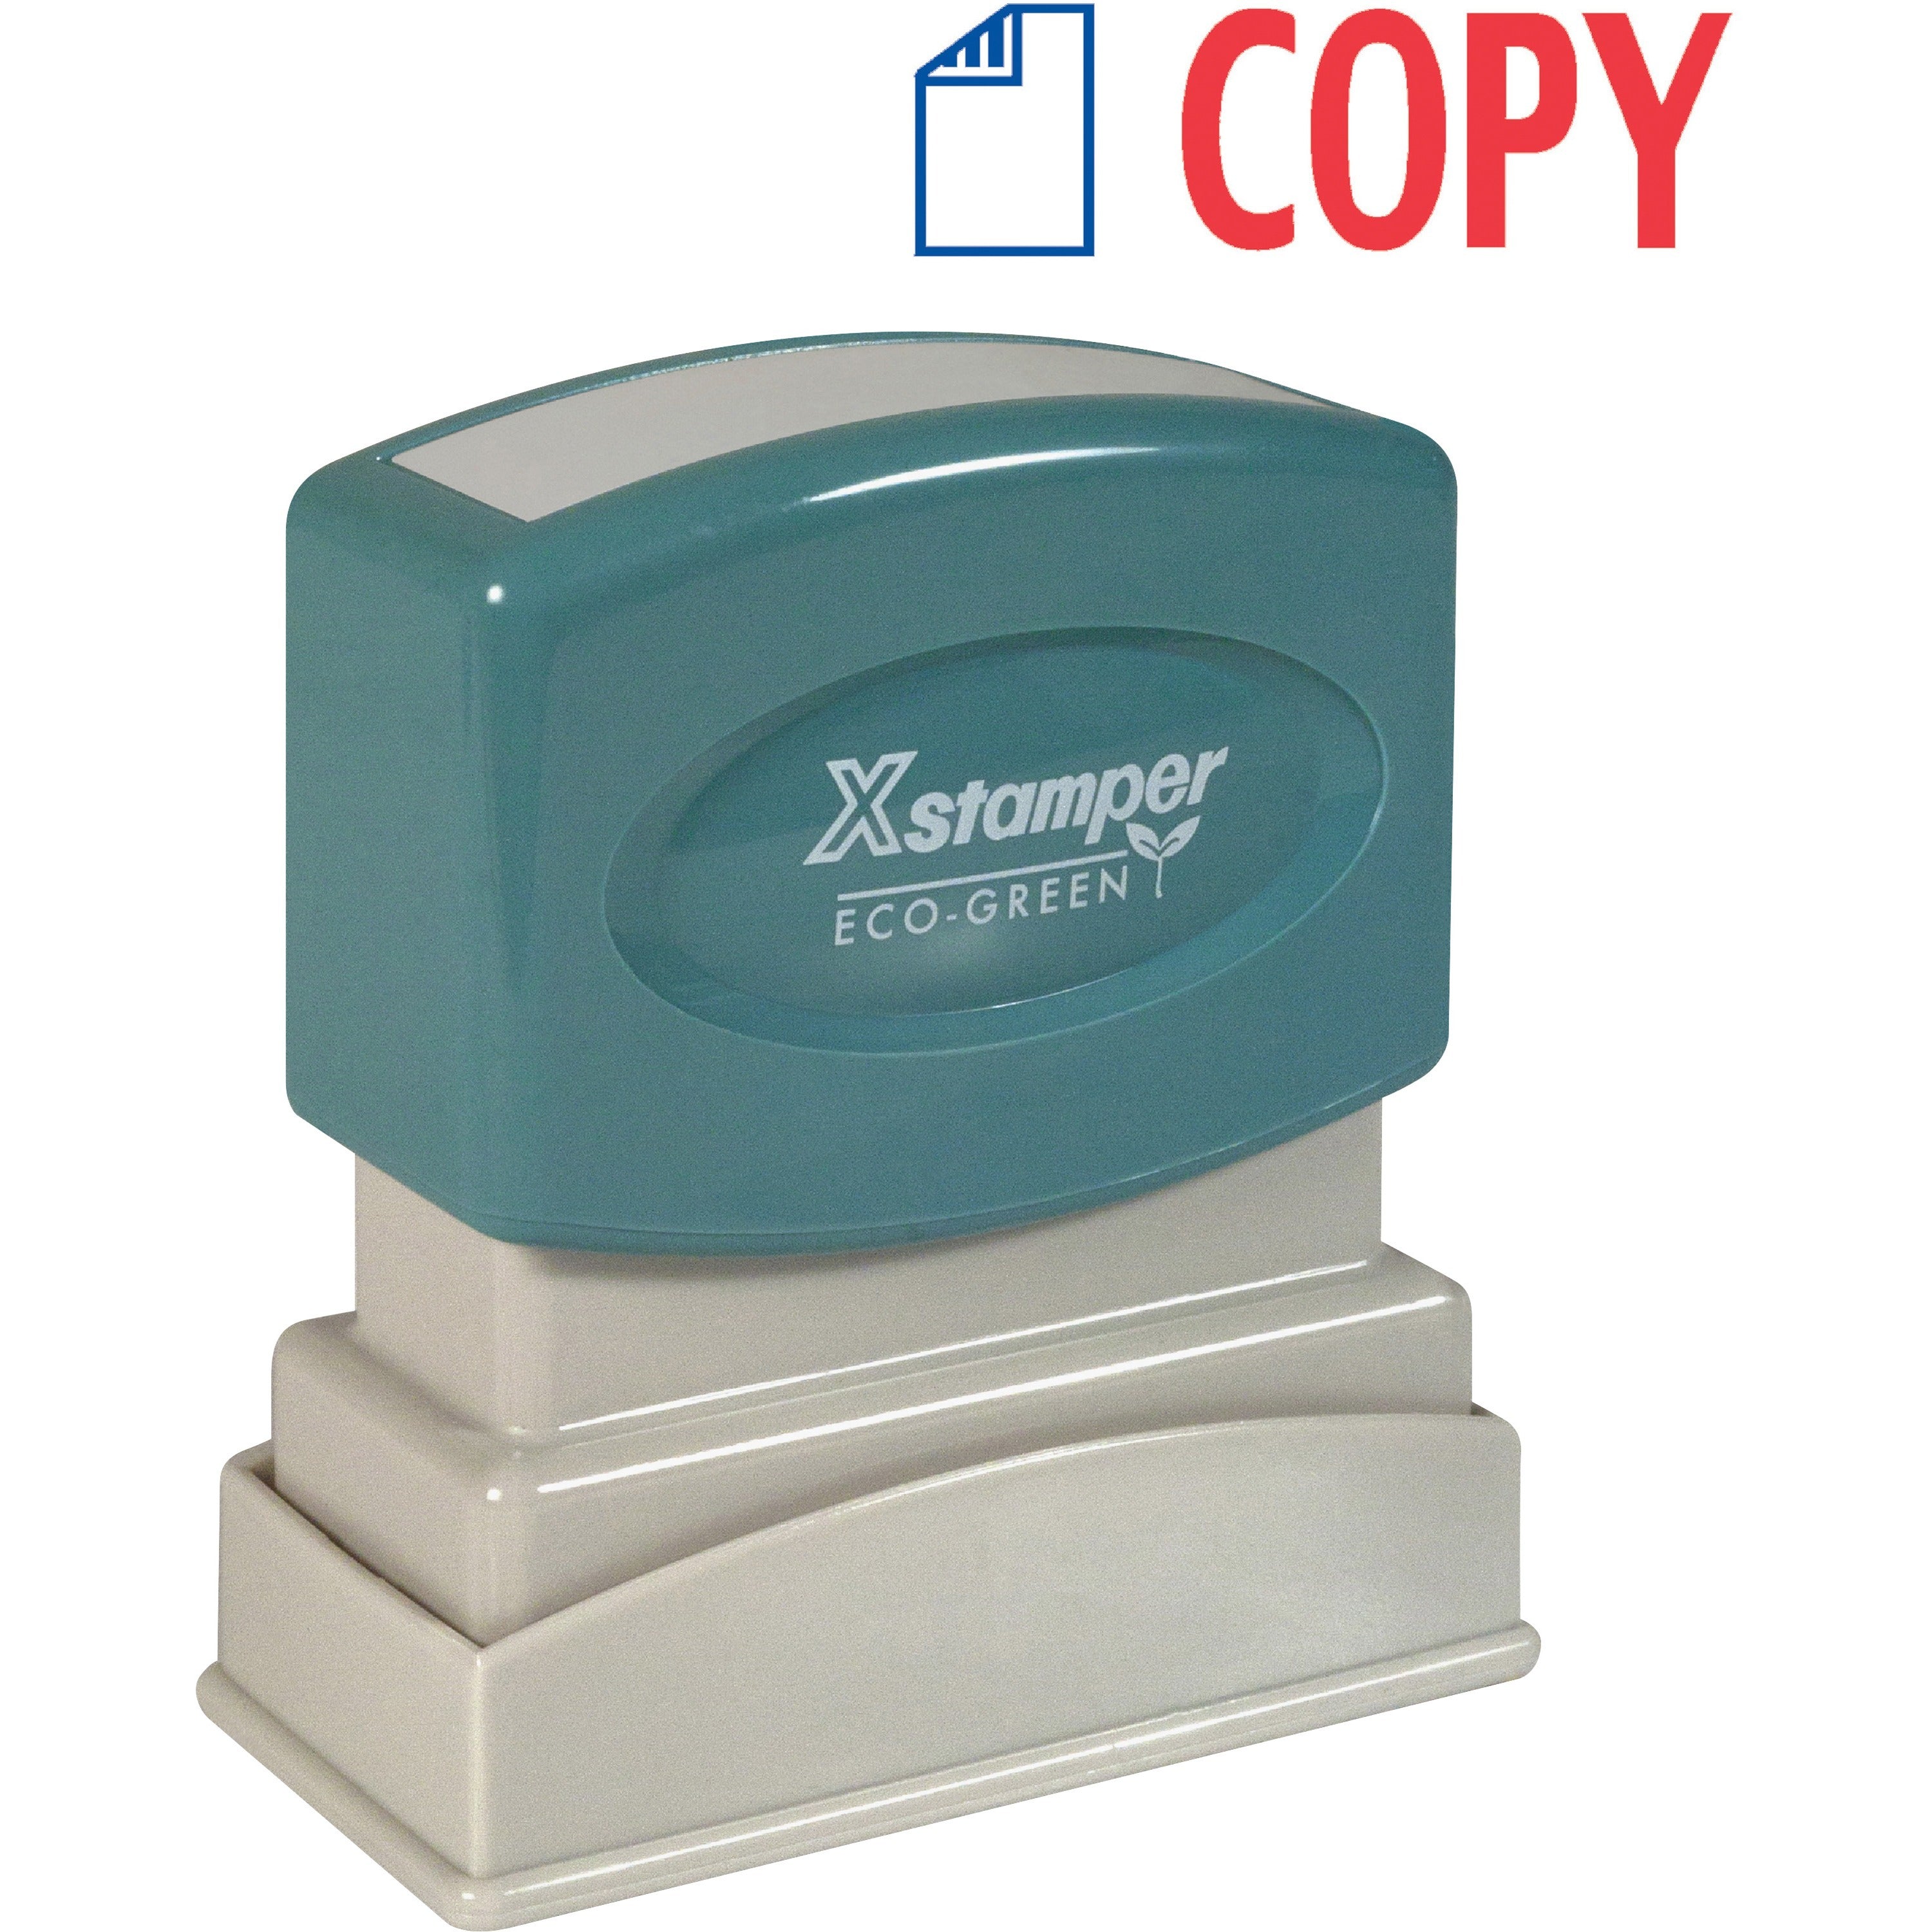 Xstamper COPY 2-color Pre-inked Stamp - Message Stamp - "COPY" - 0.50" Impression Width - 100000 Impression(s) - Red, Blue - Polymer Polymer - Recycled - 1 Each - 